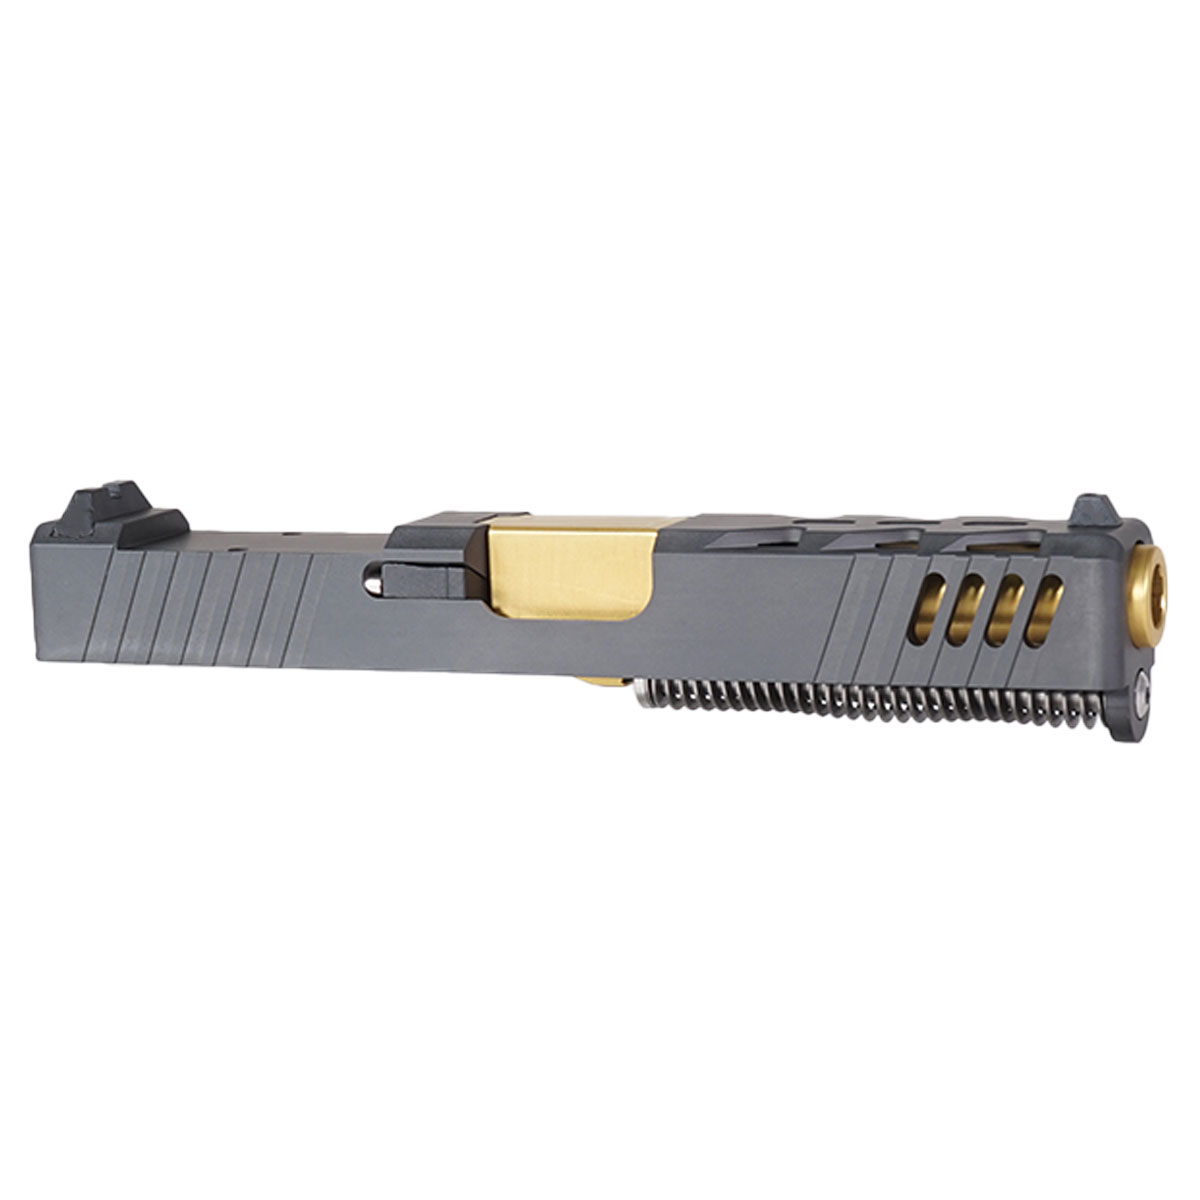 MMC 'High Ground' 9mm Complete Slide Kit - Glock 19 Gen 1-3 Compatible